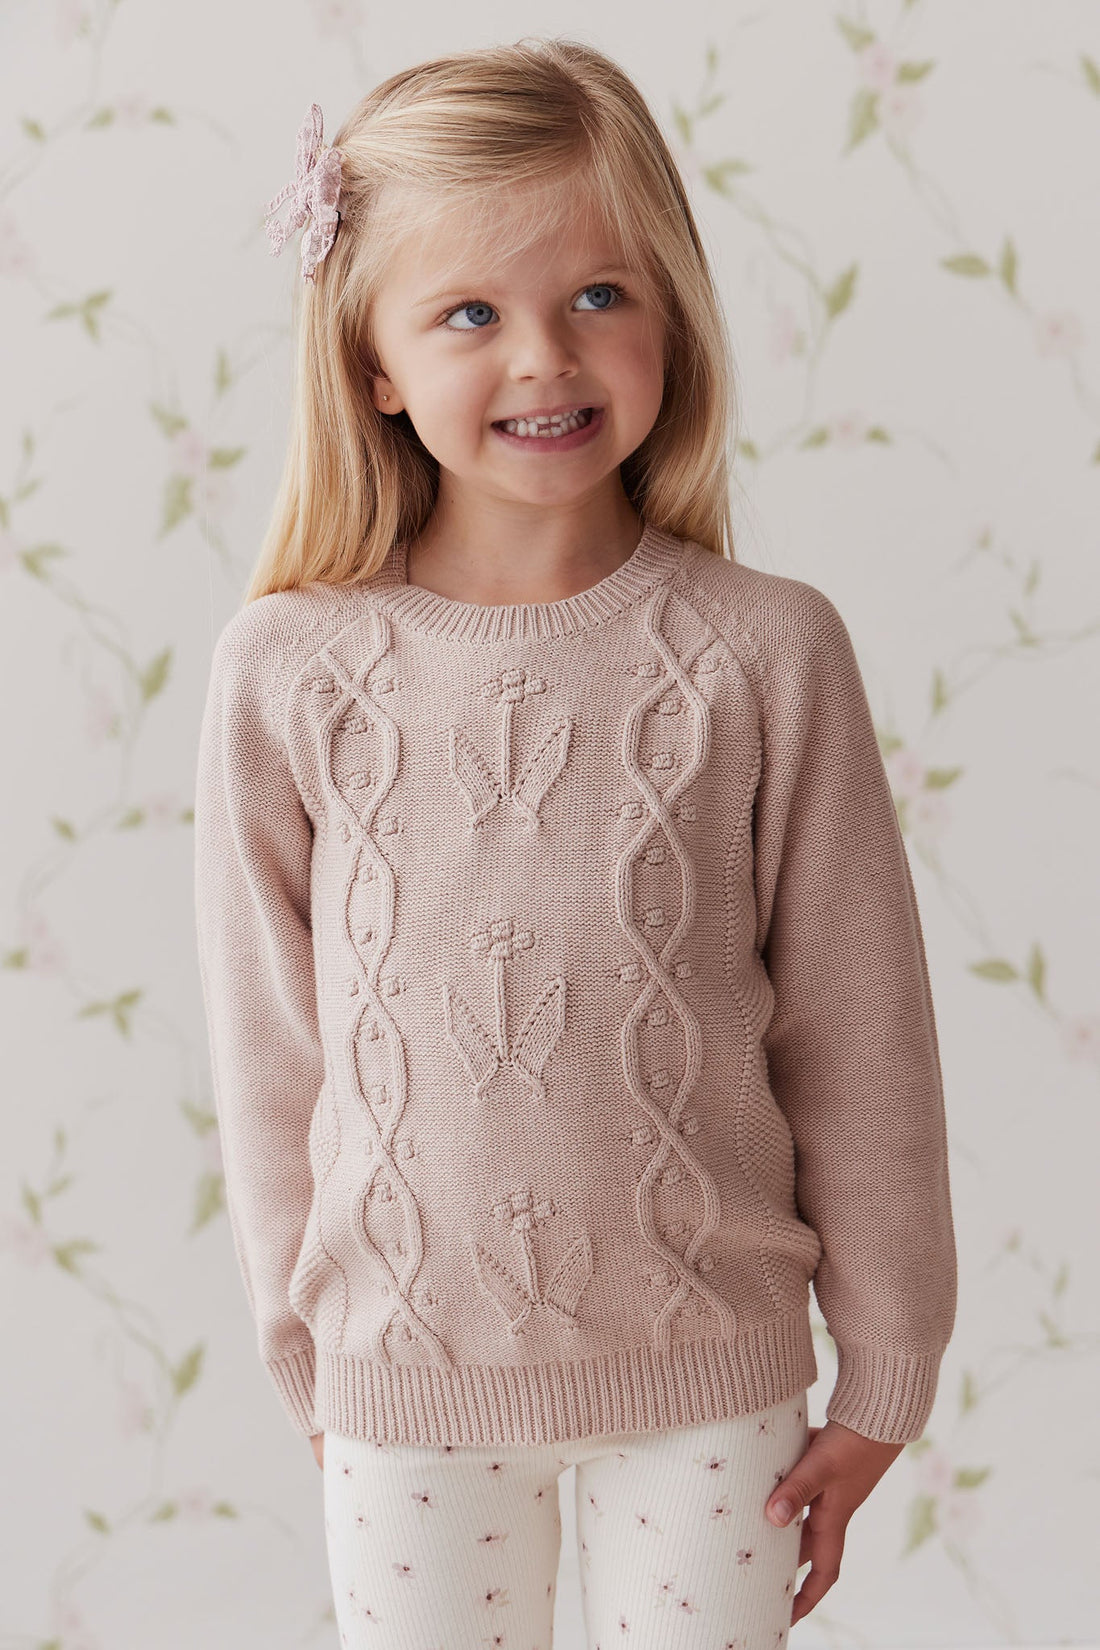 Sophia Knitted Jumper - Almond Marle Childrens Knitwear from Jamie Kay NZ